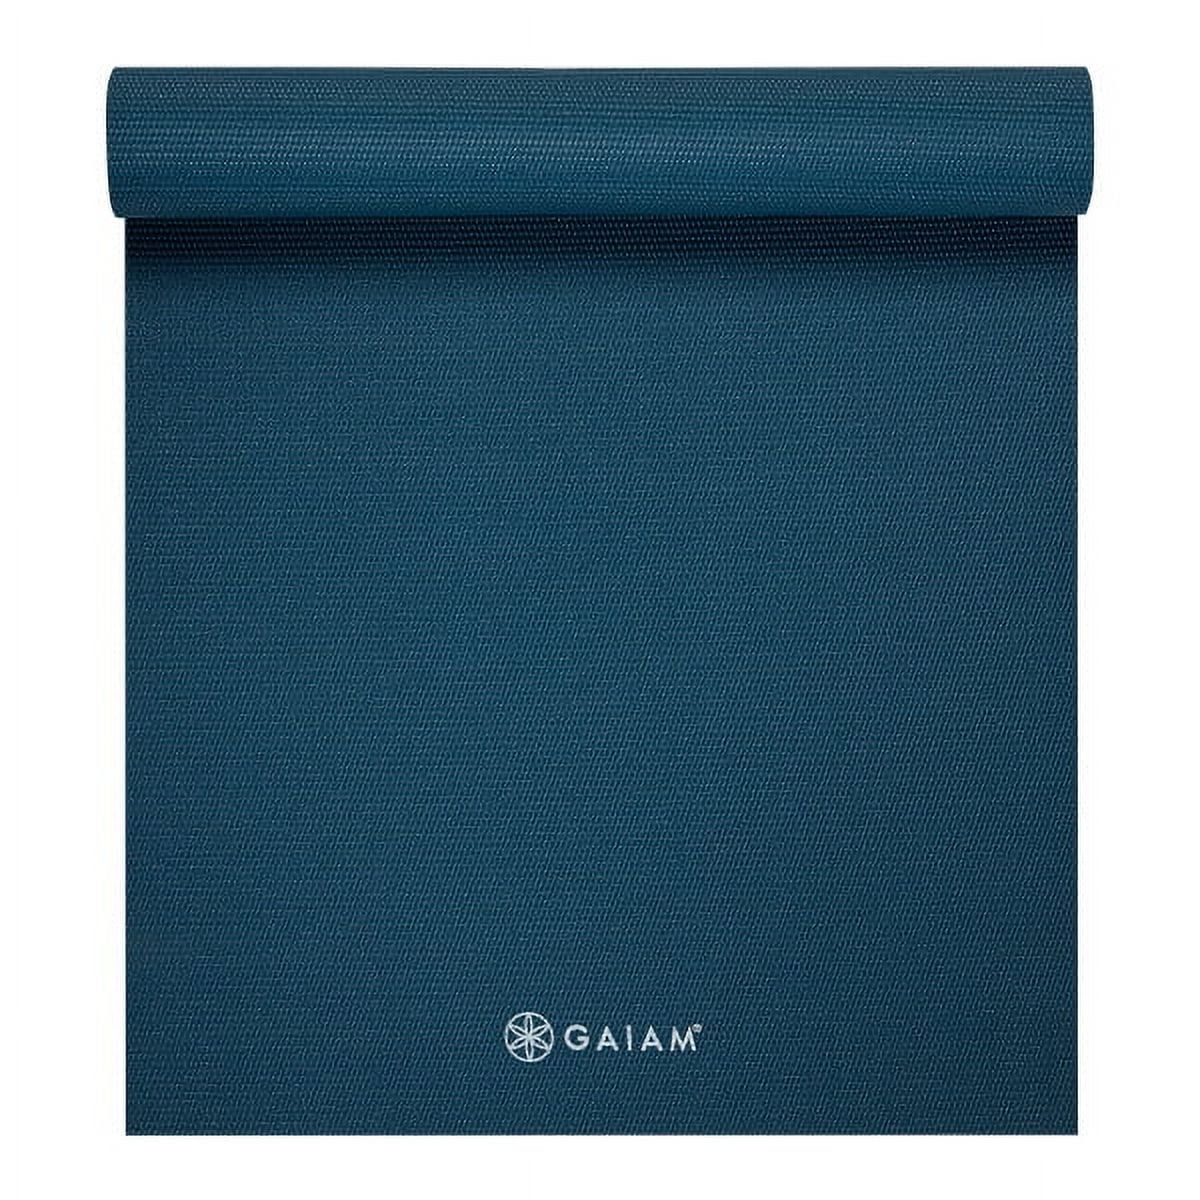 Gaiam Solid Color Yoga Mat, Marine, 5mm 